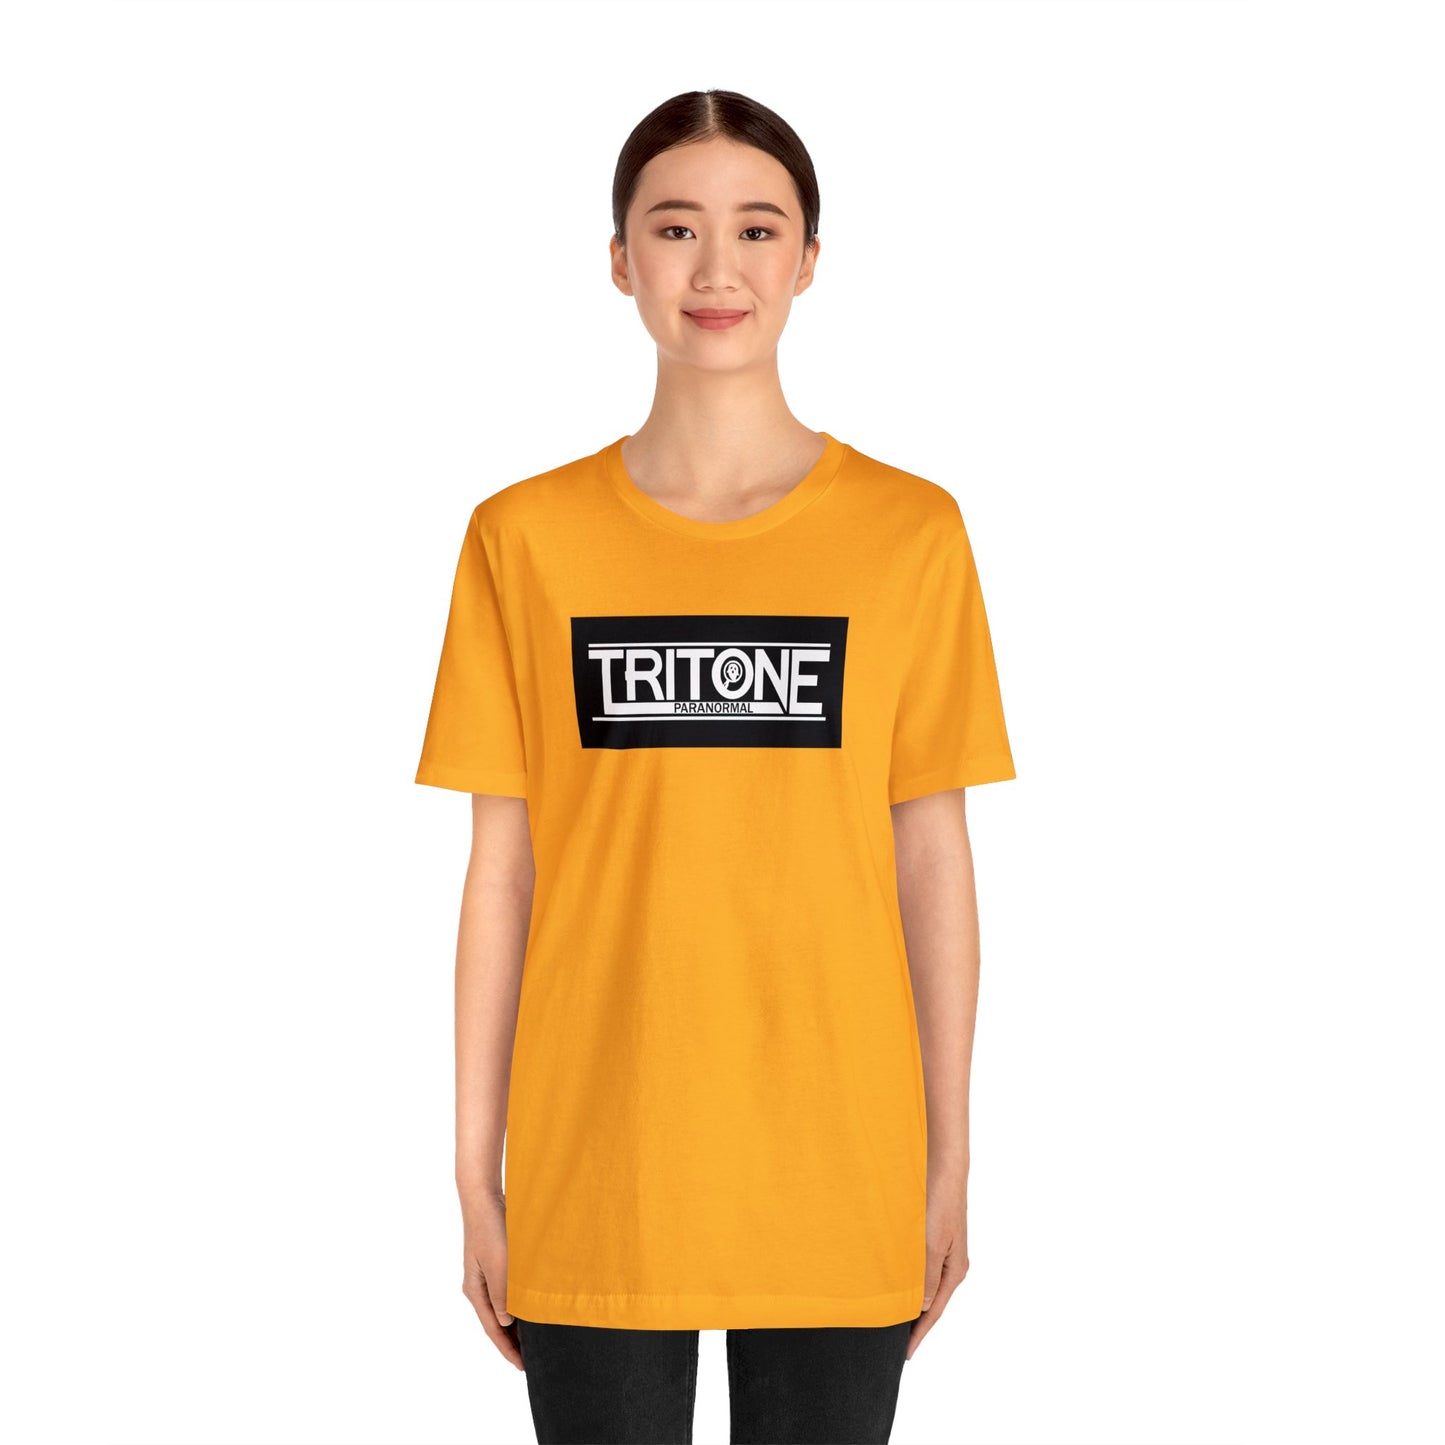 Tritone Paranormal T-Shirt